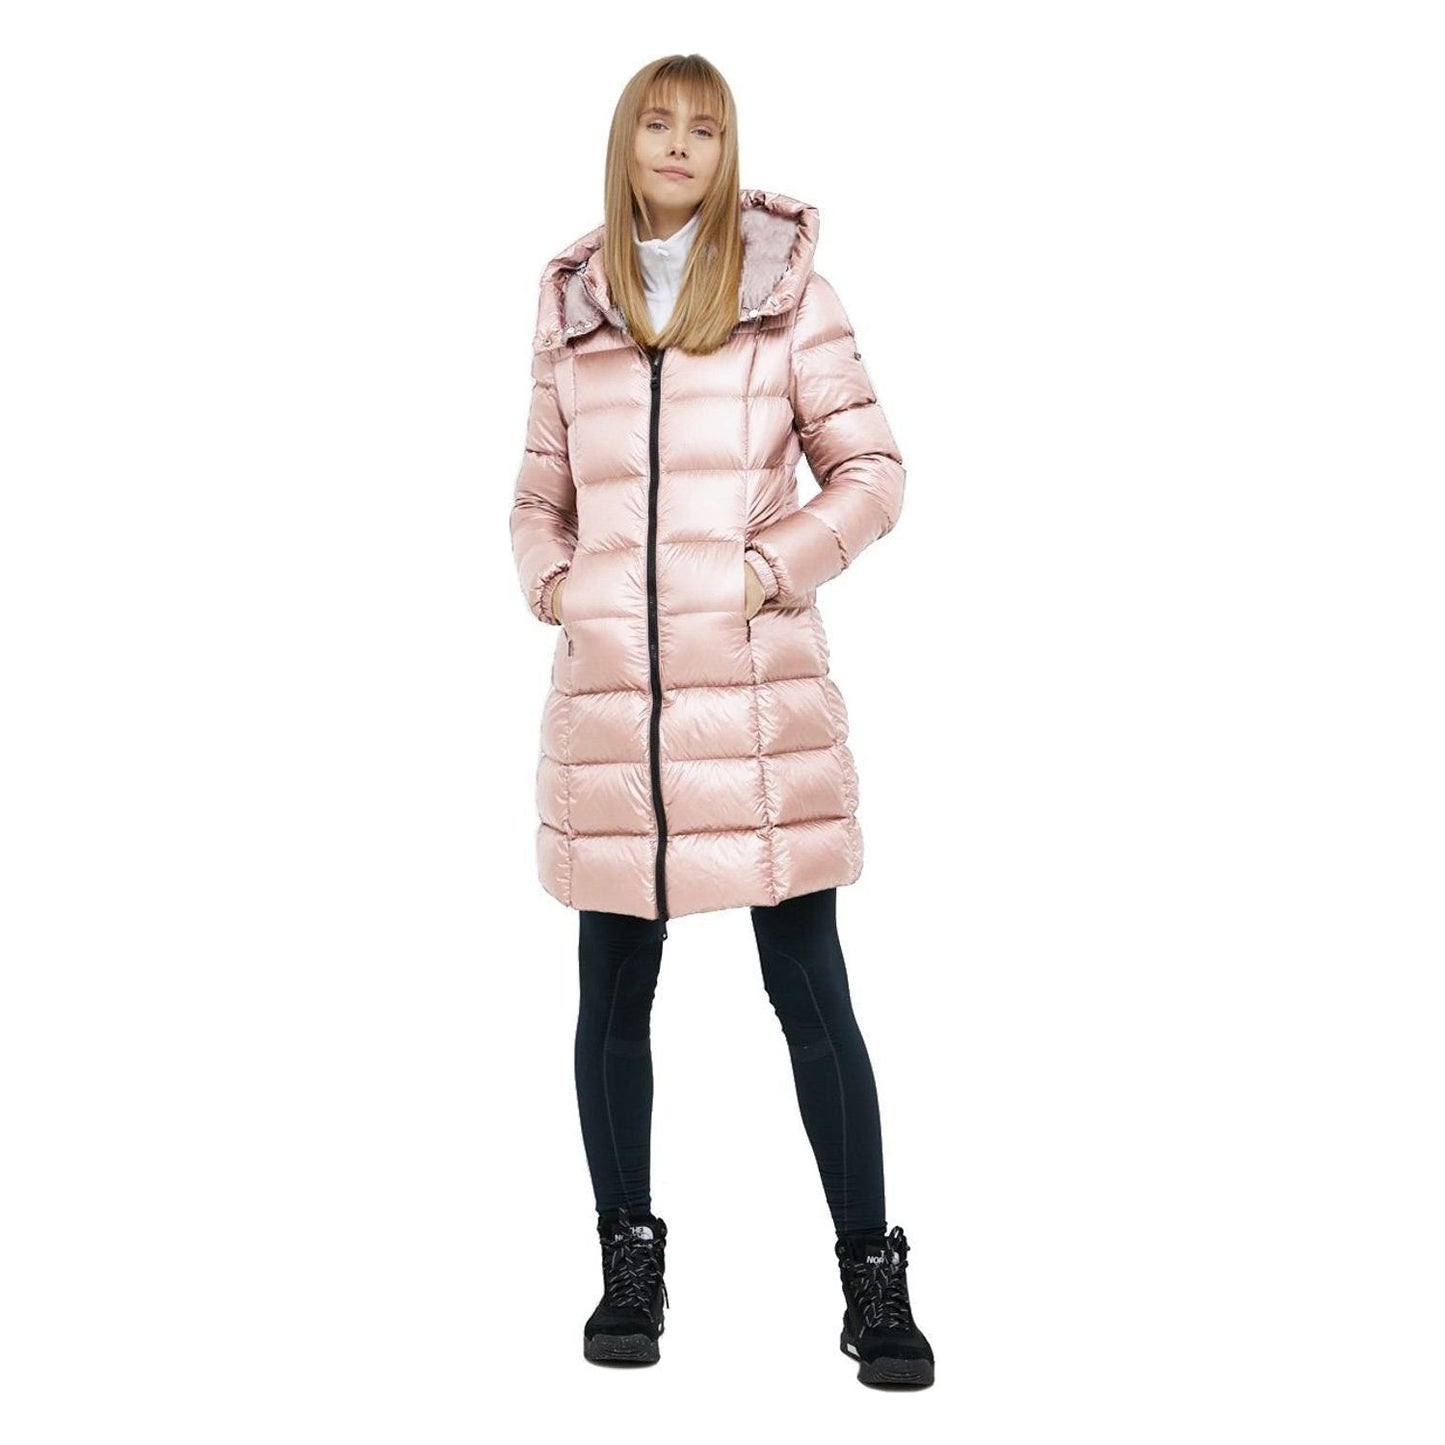 Refrigiwear Elegant Long Down Jacket with Removable Hood pink-nylon-jackets-coat WOMAN COATS & JACKETS product-7909-1139266708-3-aae7a775-063.jpg